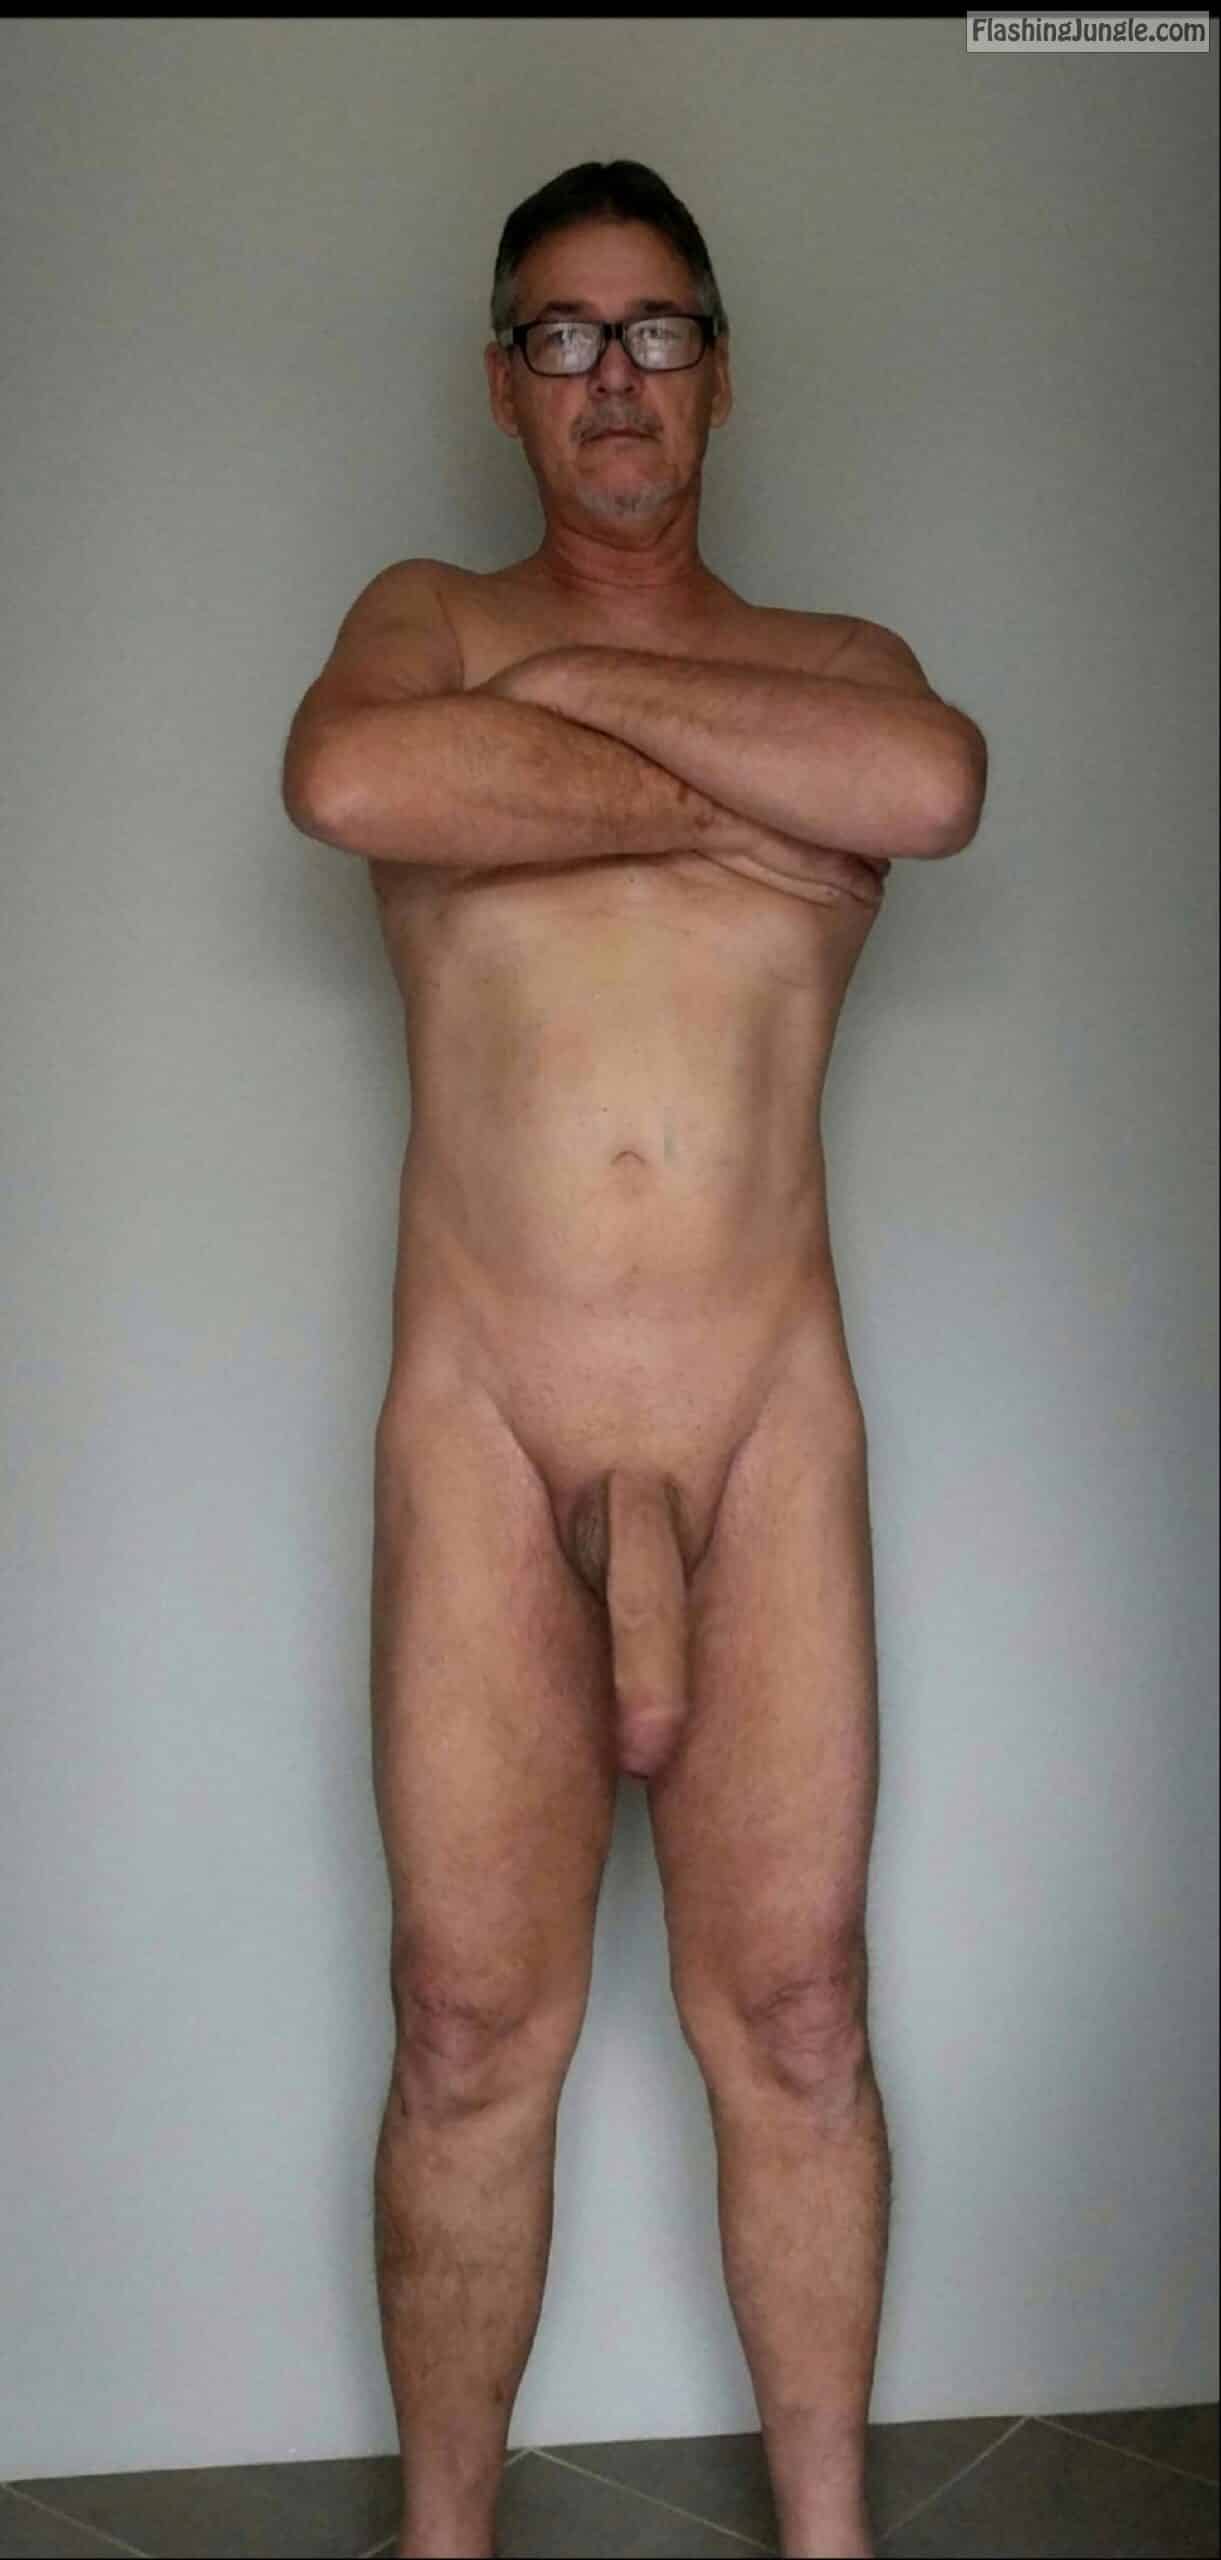 Dick Flash Pics: Mature Monster Cock True Nudist 4 True Nudist 4